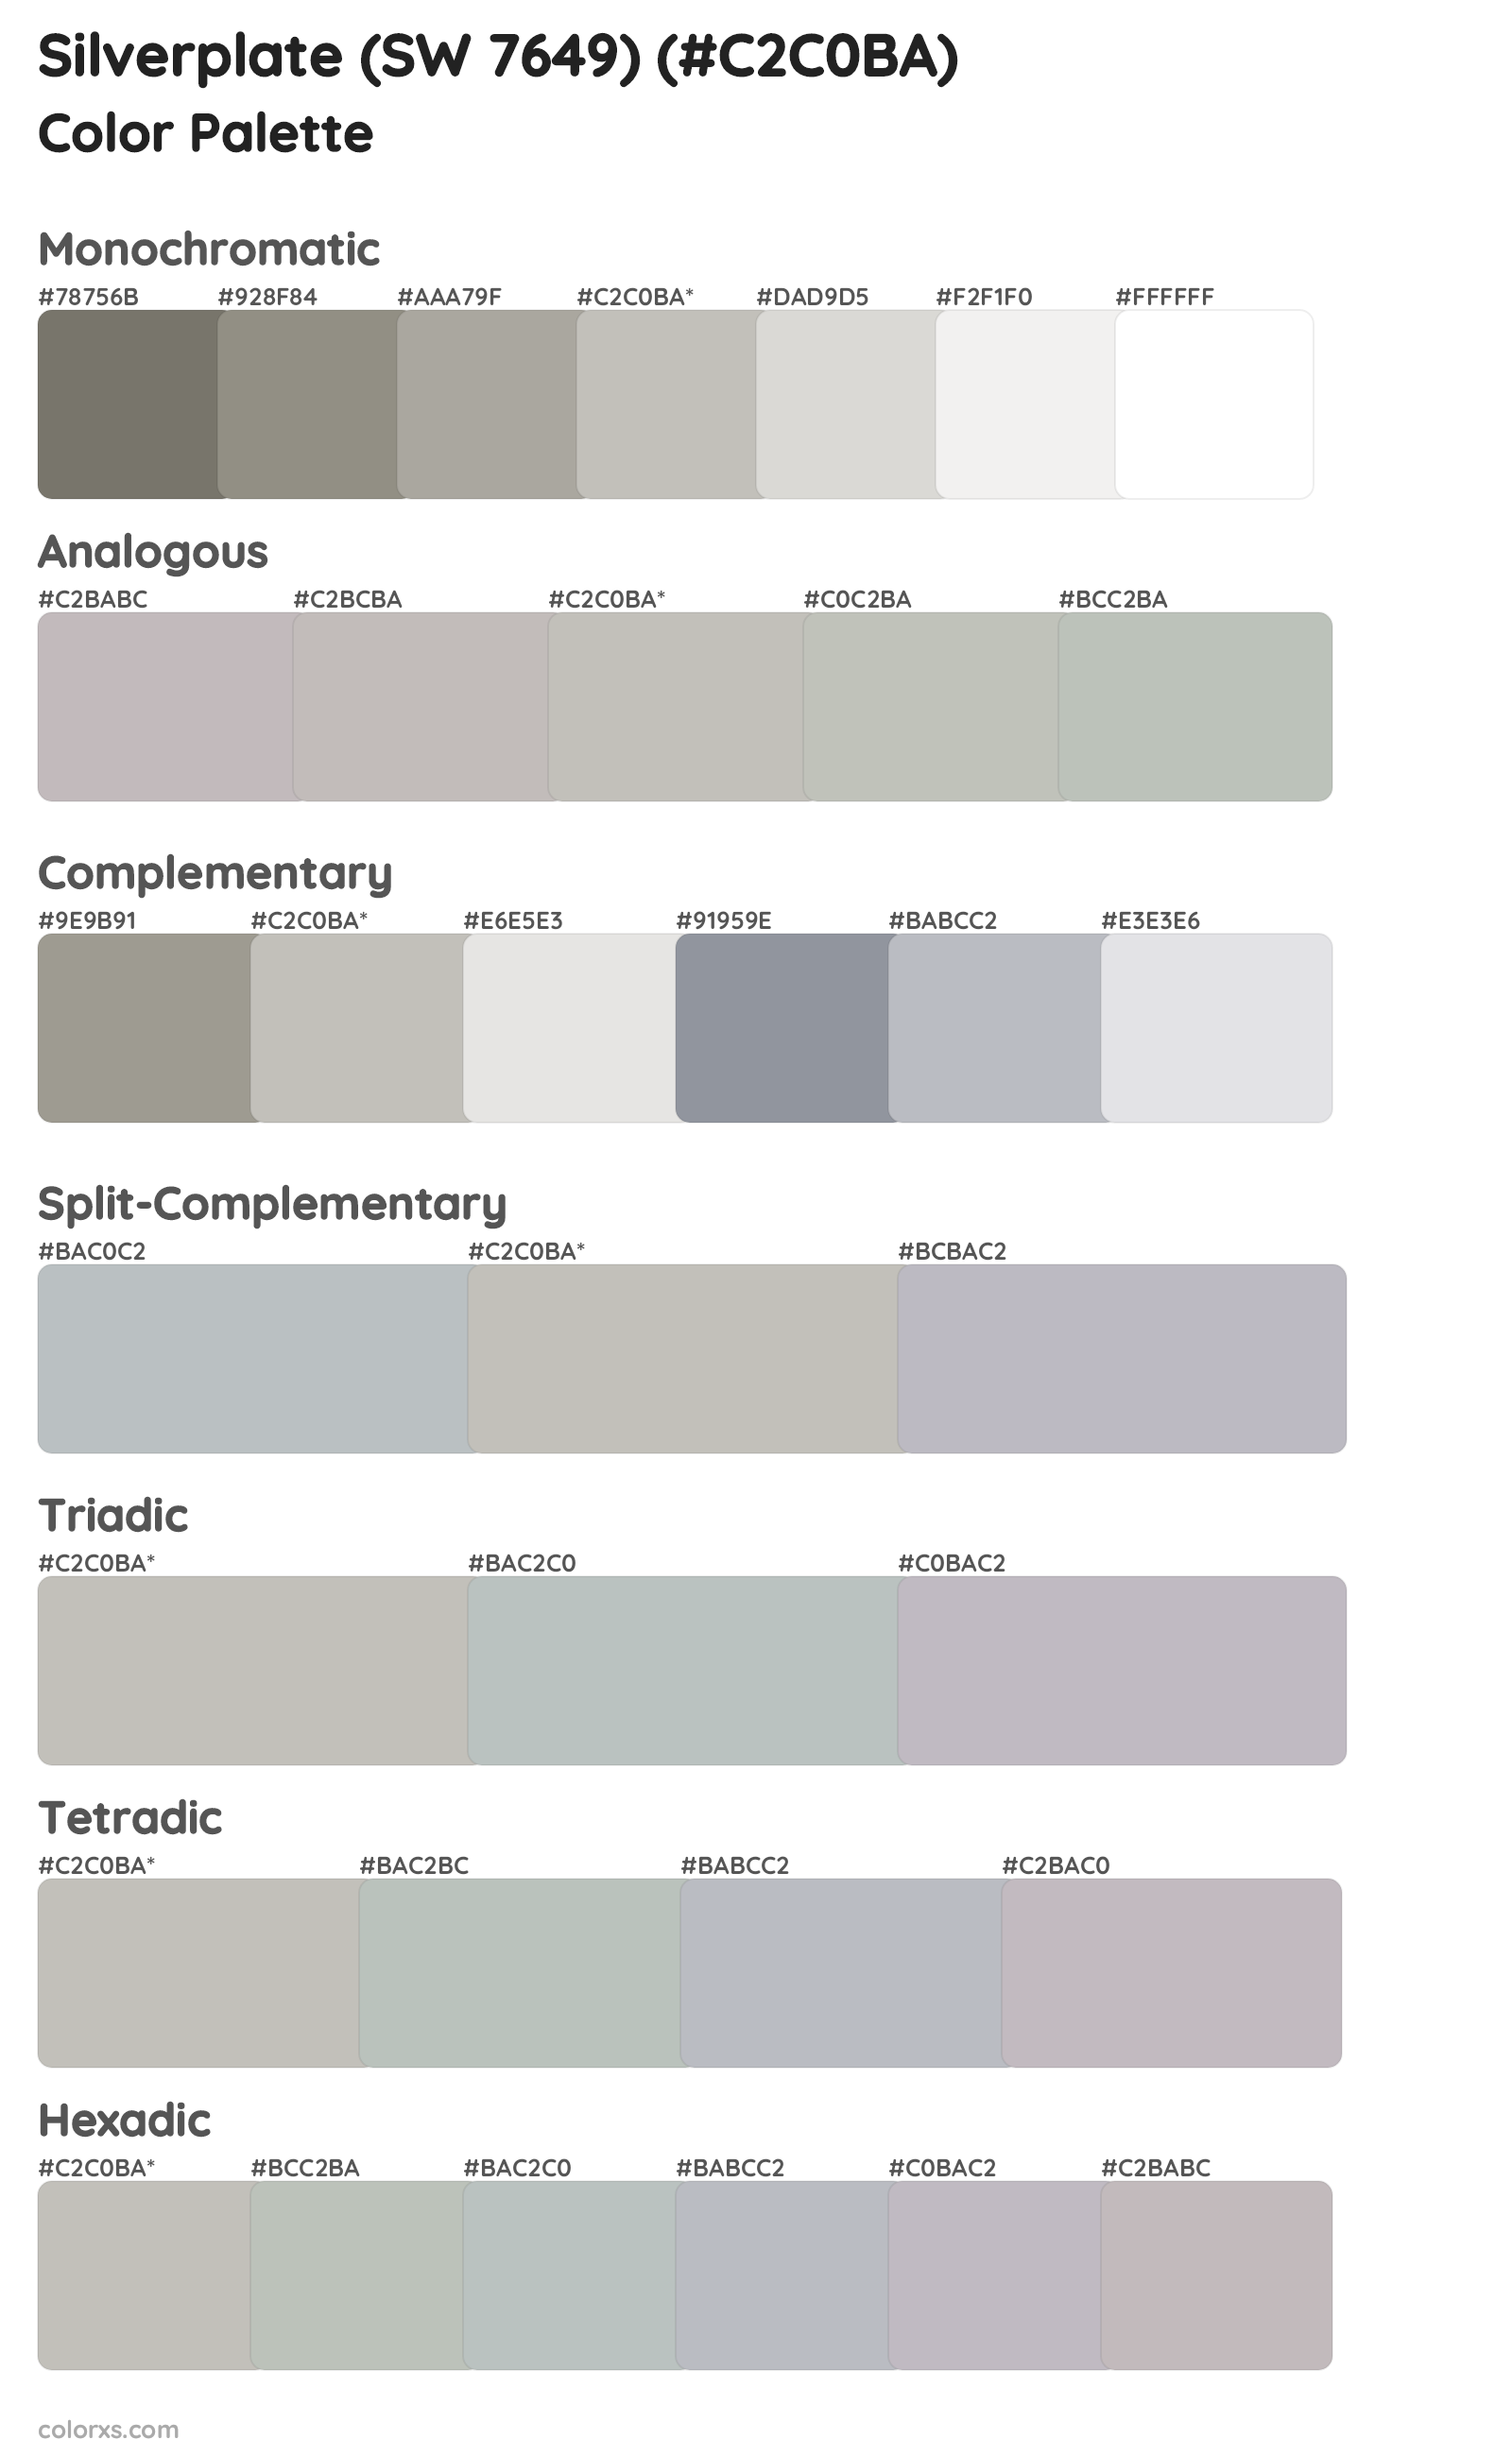 Silverplate (SW 7649) Color Scheme Palettes